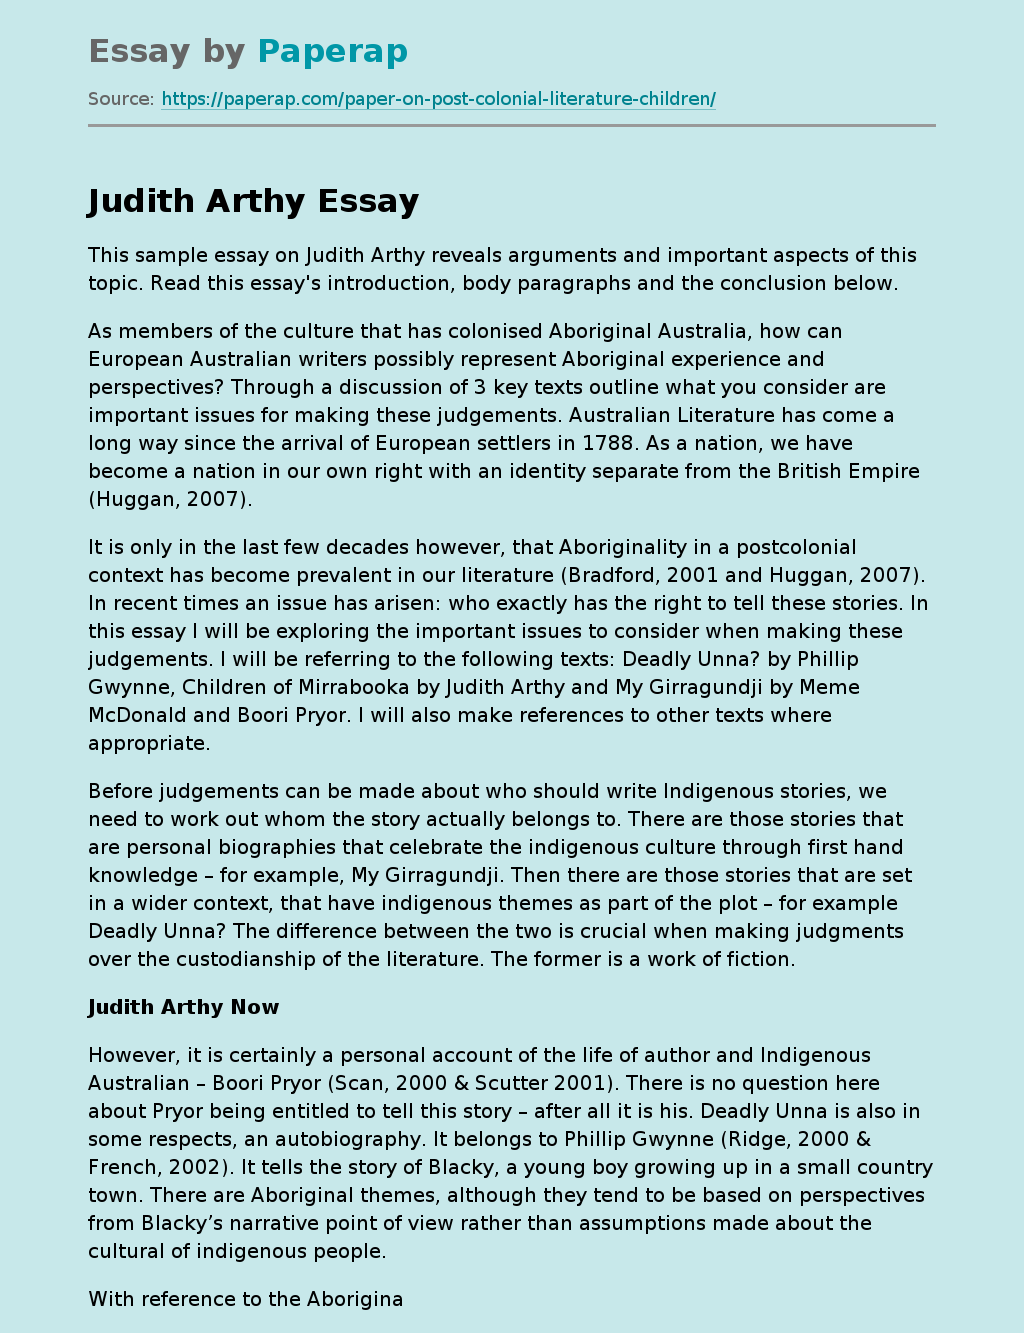 This Sample Essay on Judith Arthy